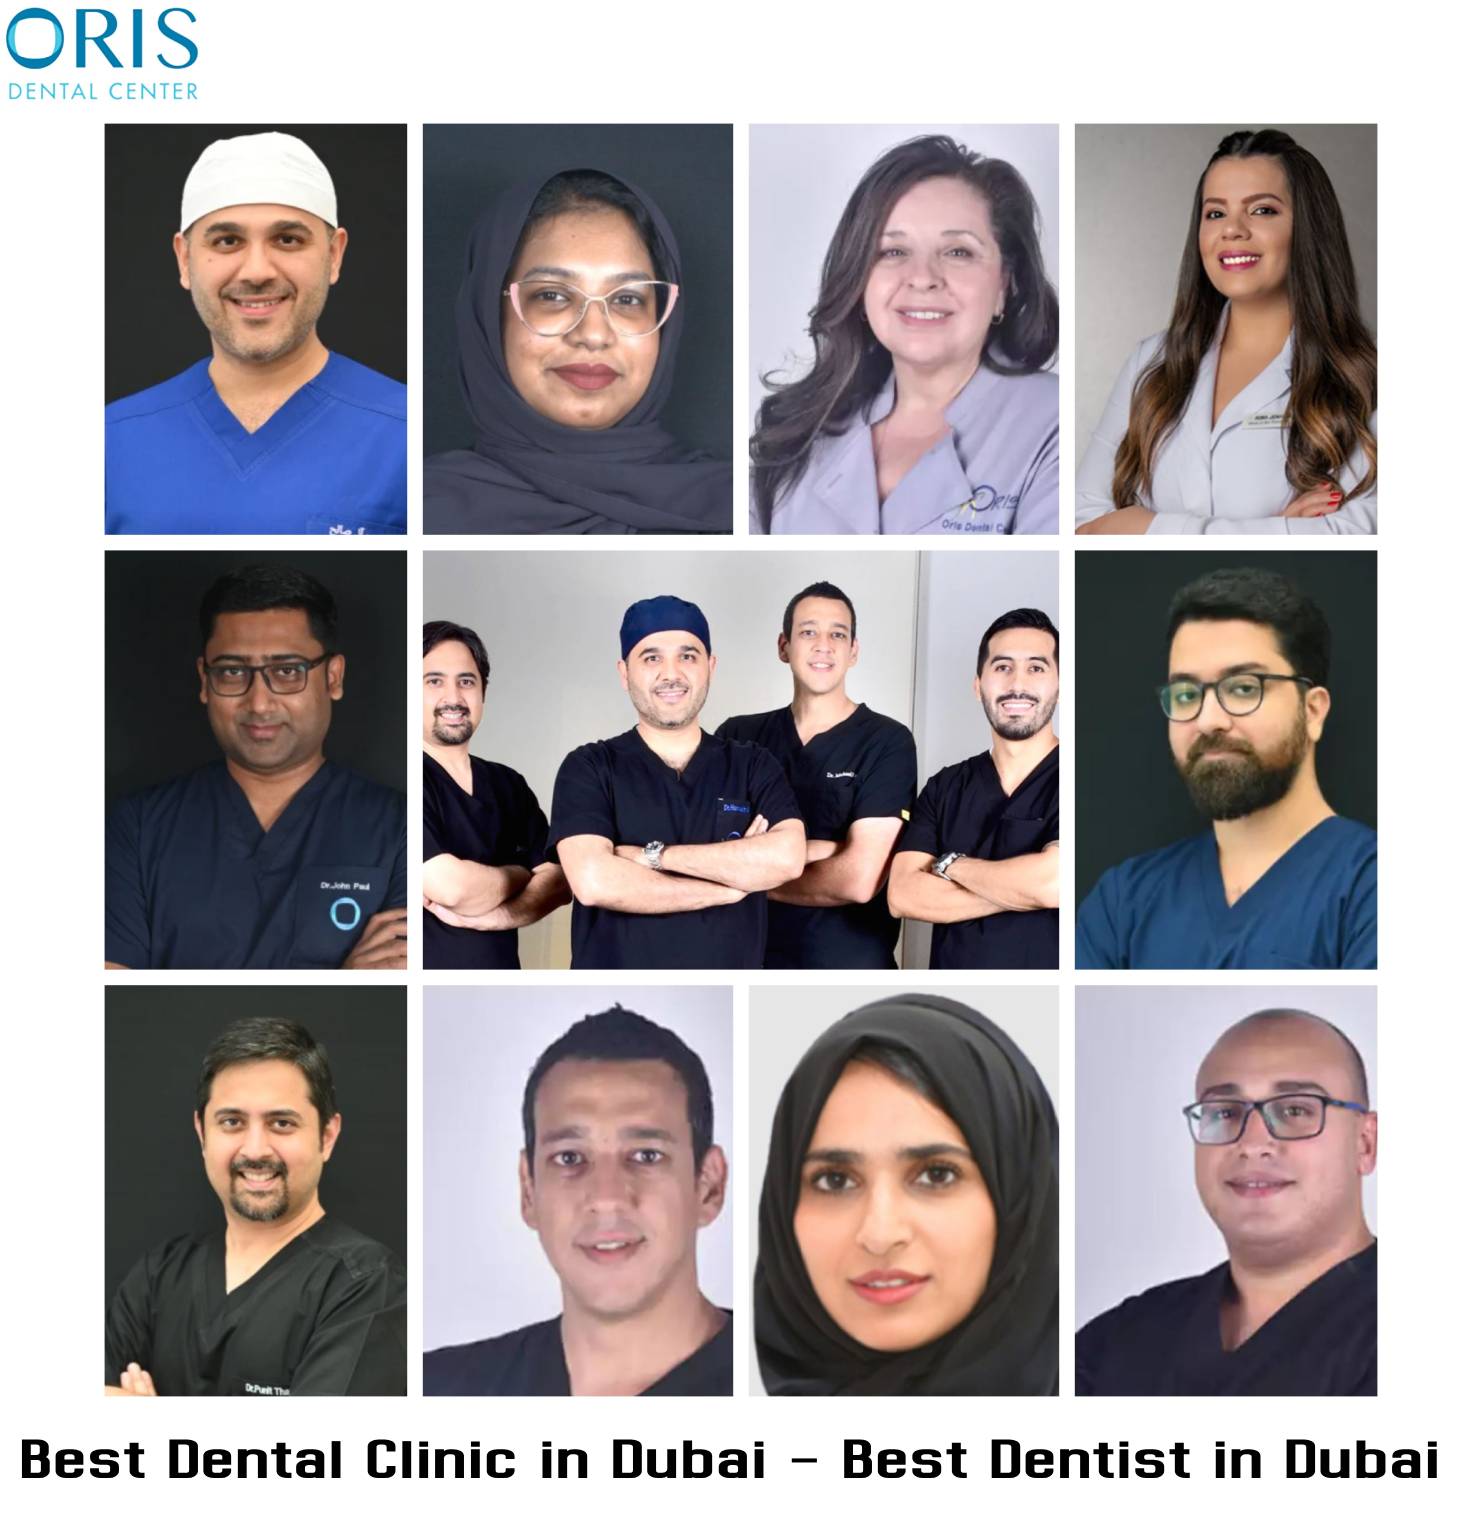 Best Dental Clinic in Dubai - Best Dentist in Dubai